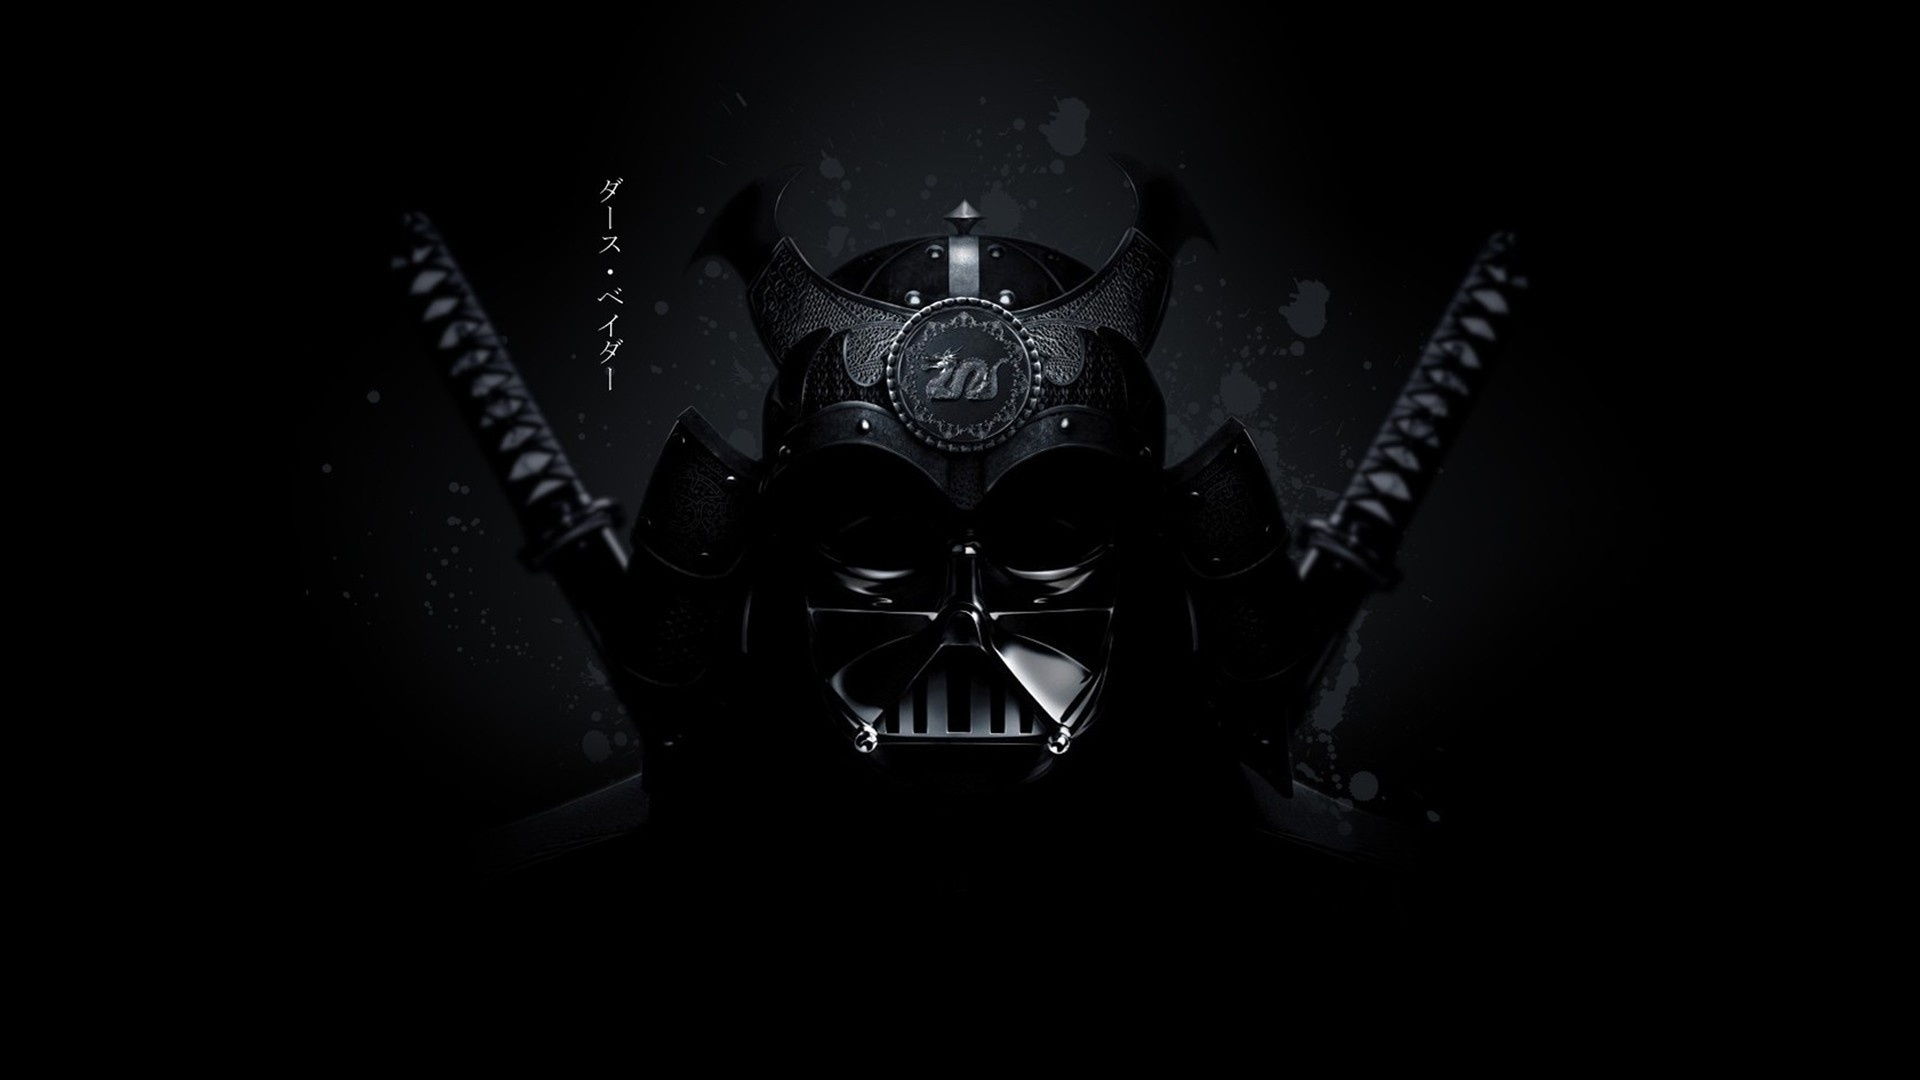 Samurai Star Wars Darth Vader Render Mask Sci Fi Weapons Katana Sword